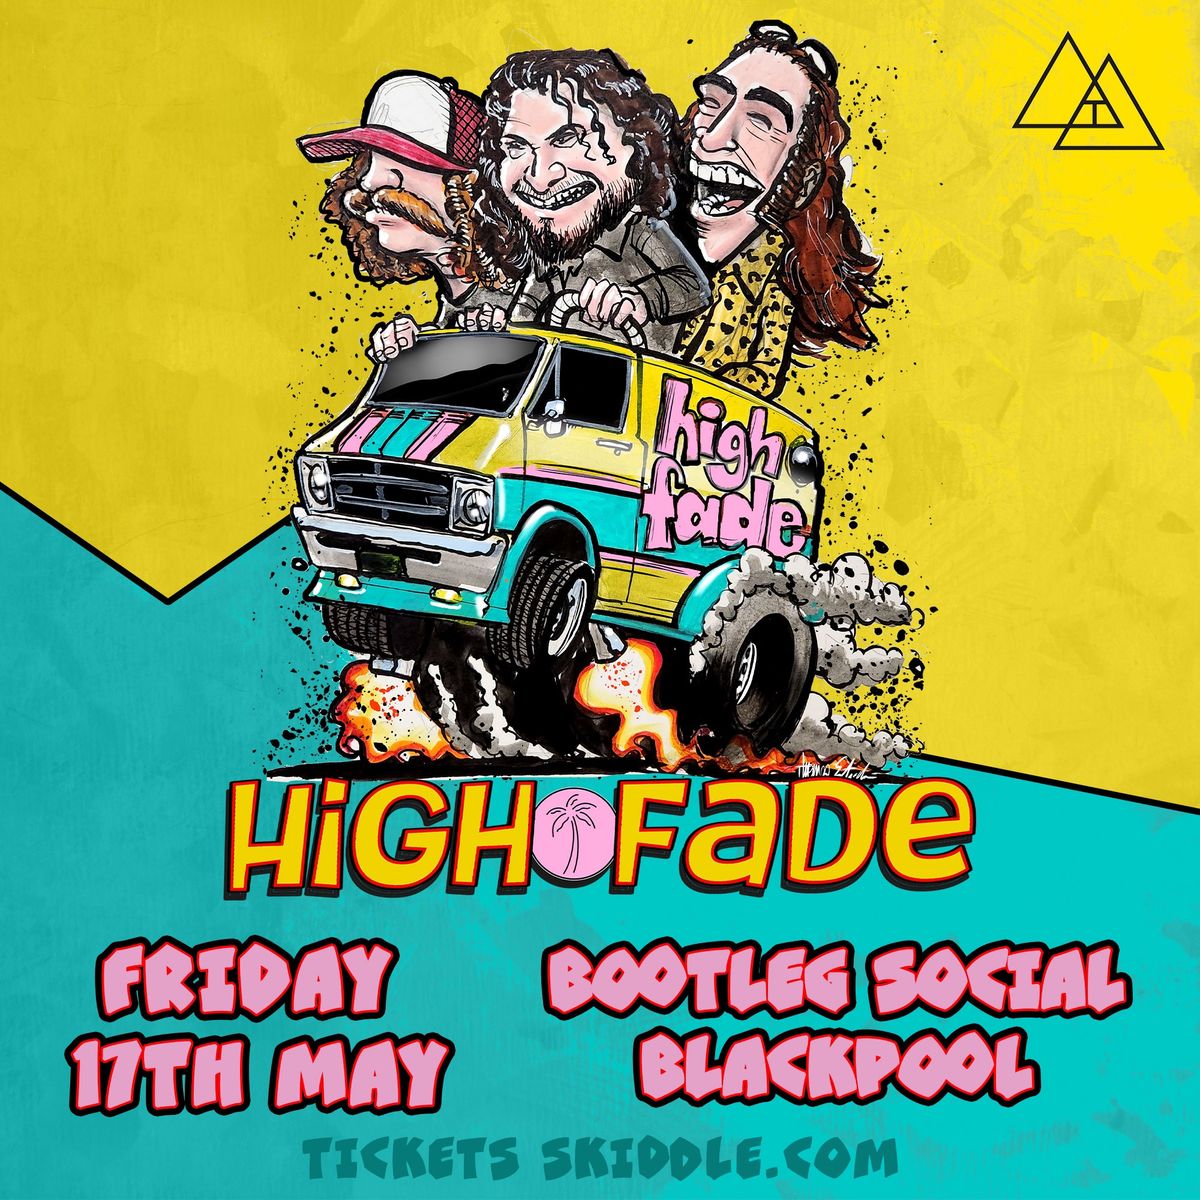 High Fade + Geese at Bootleg Social, Blackpool